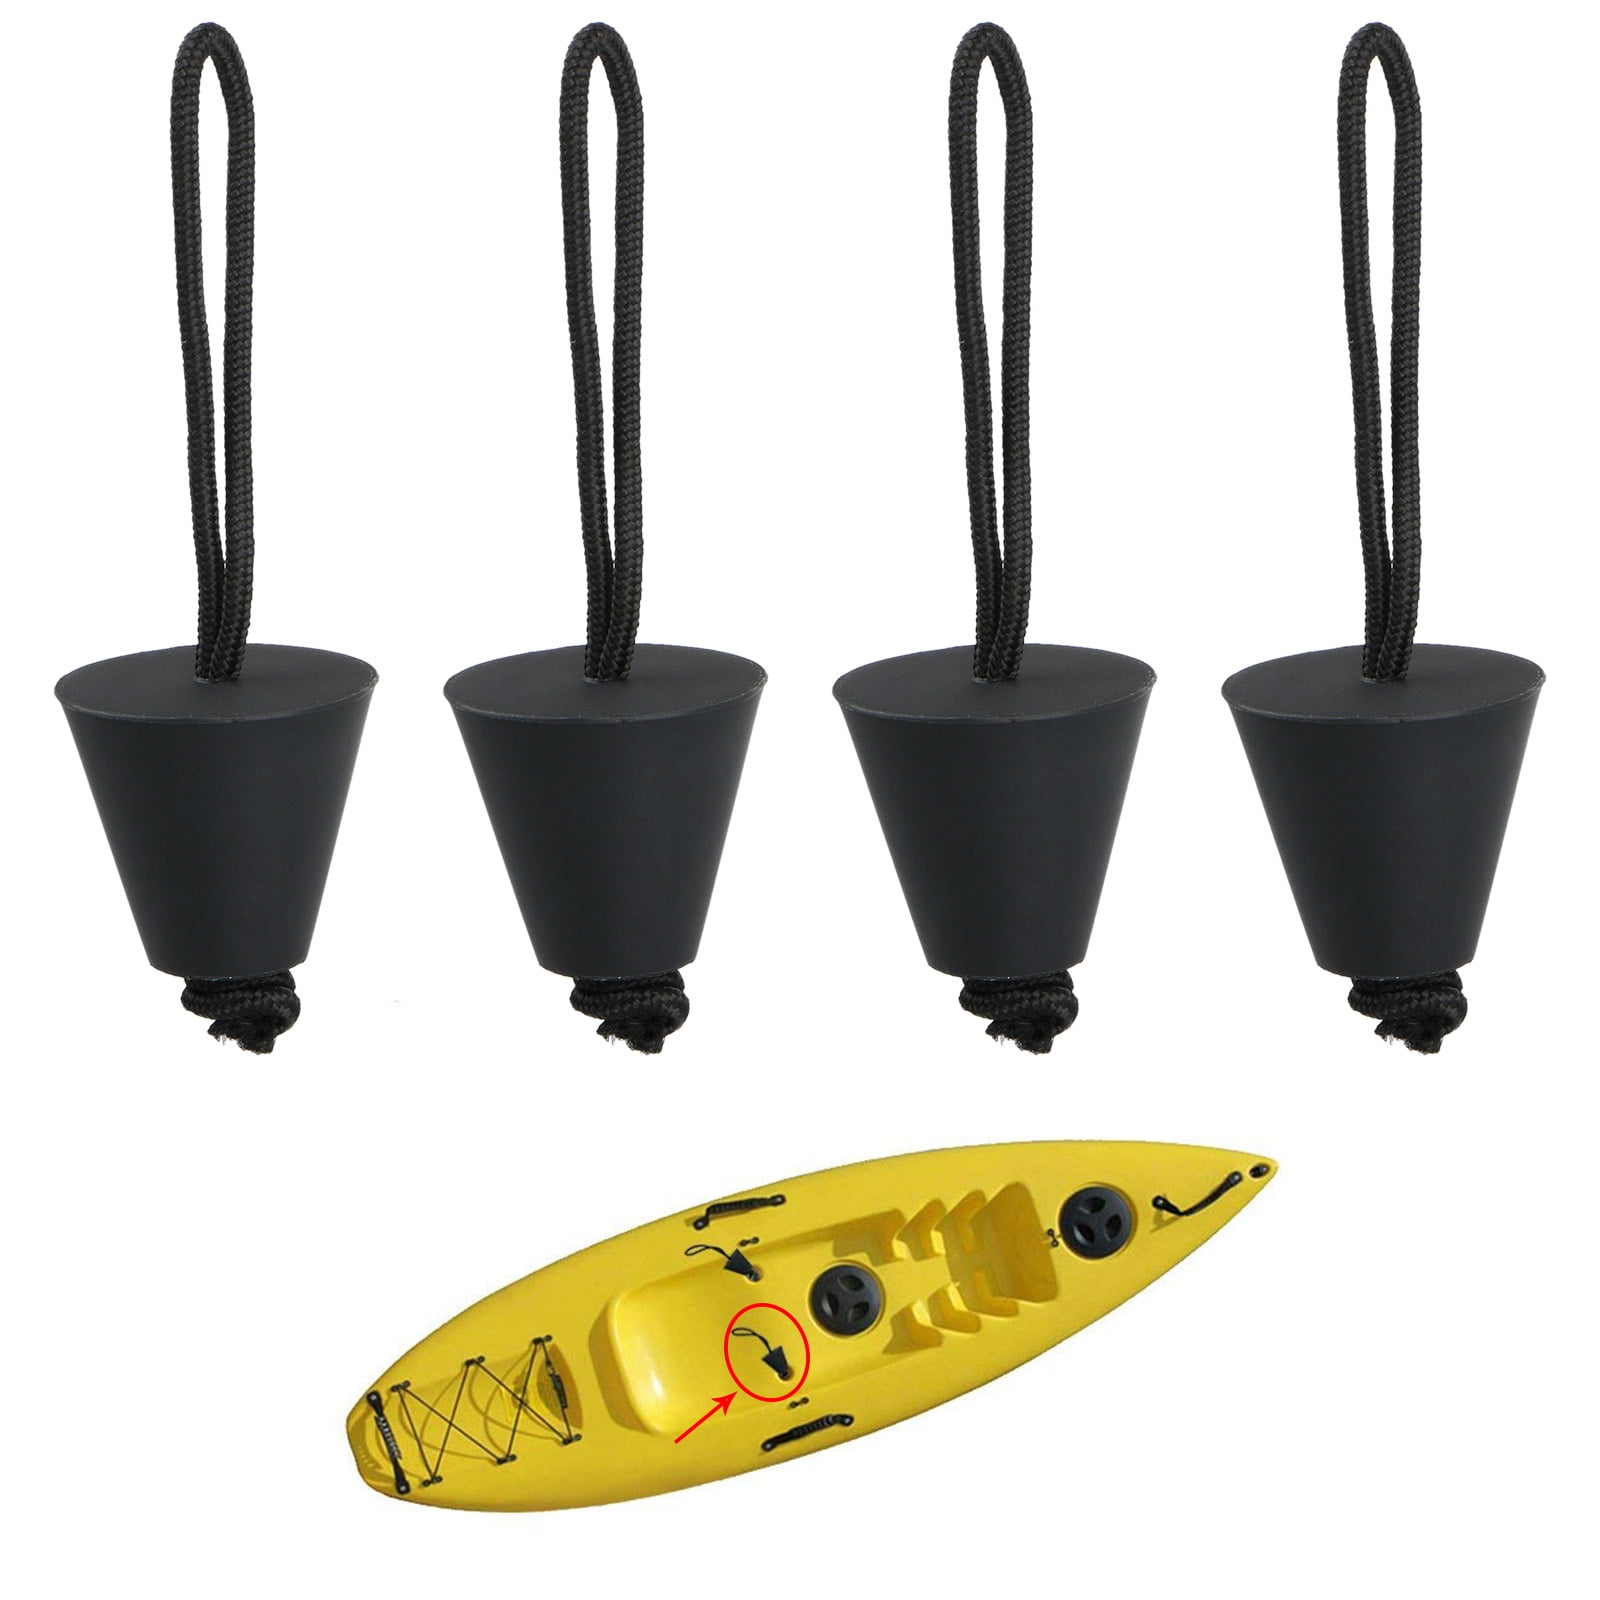 Shoreline Marine Propel Kayak Scupper Plugs 4 Pack 